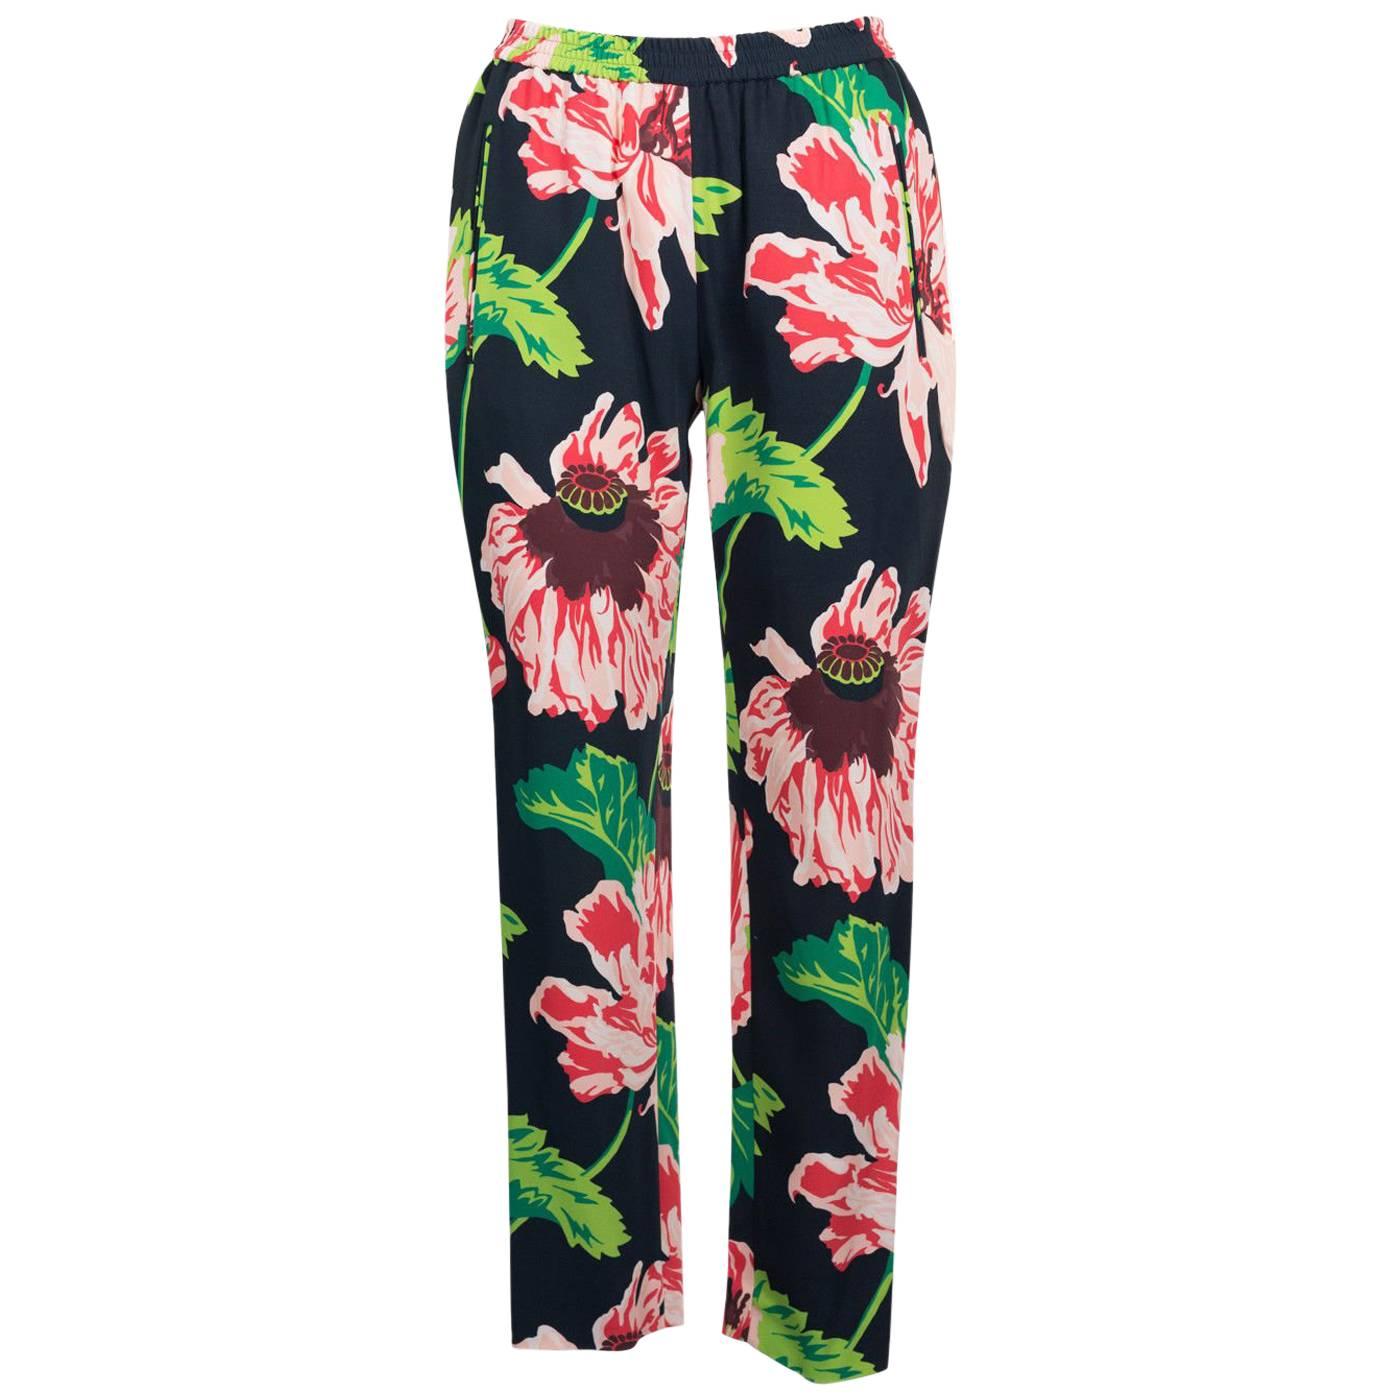 Stella McCartney Women's Black Base Pink Floral Print Slim Fit Trousers